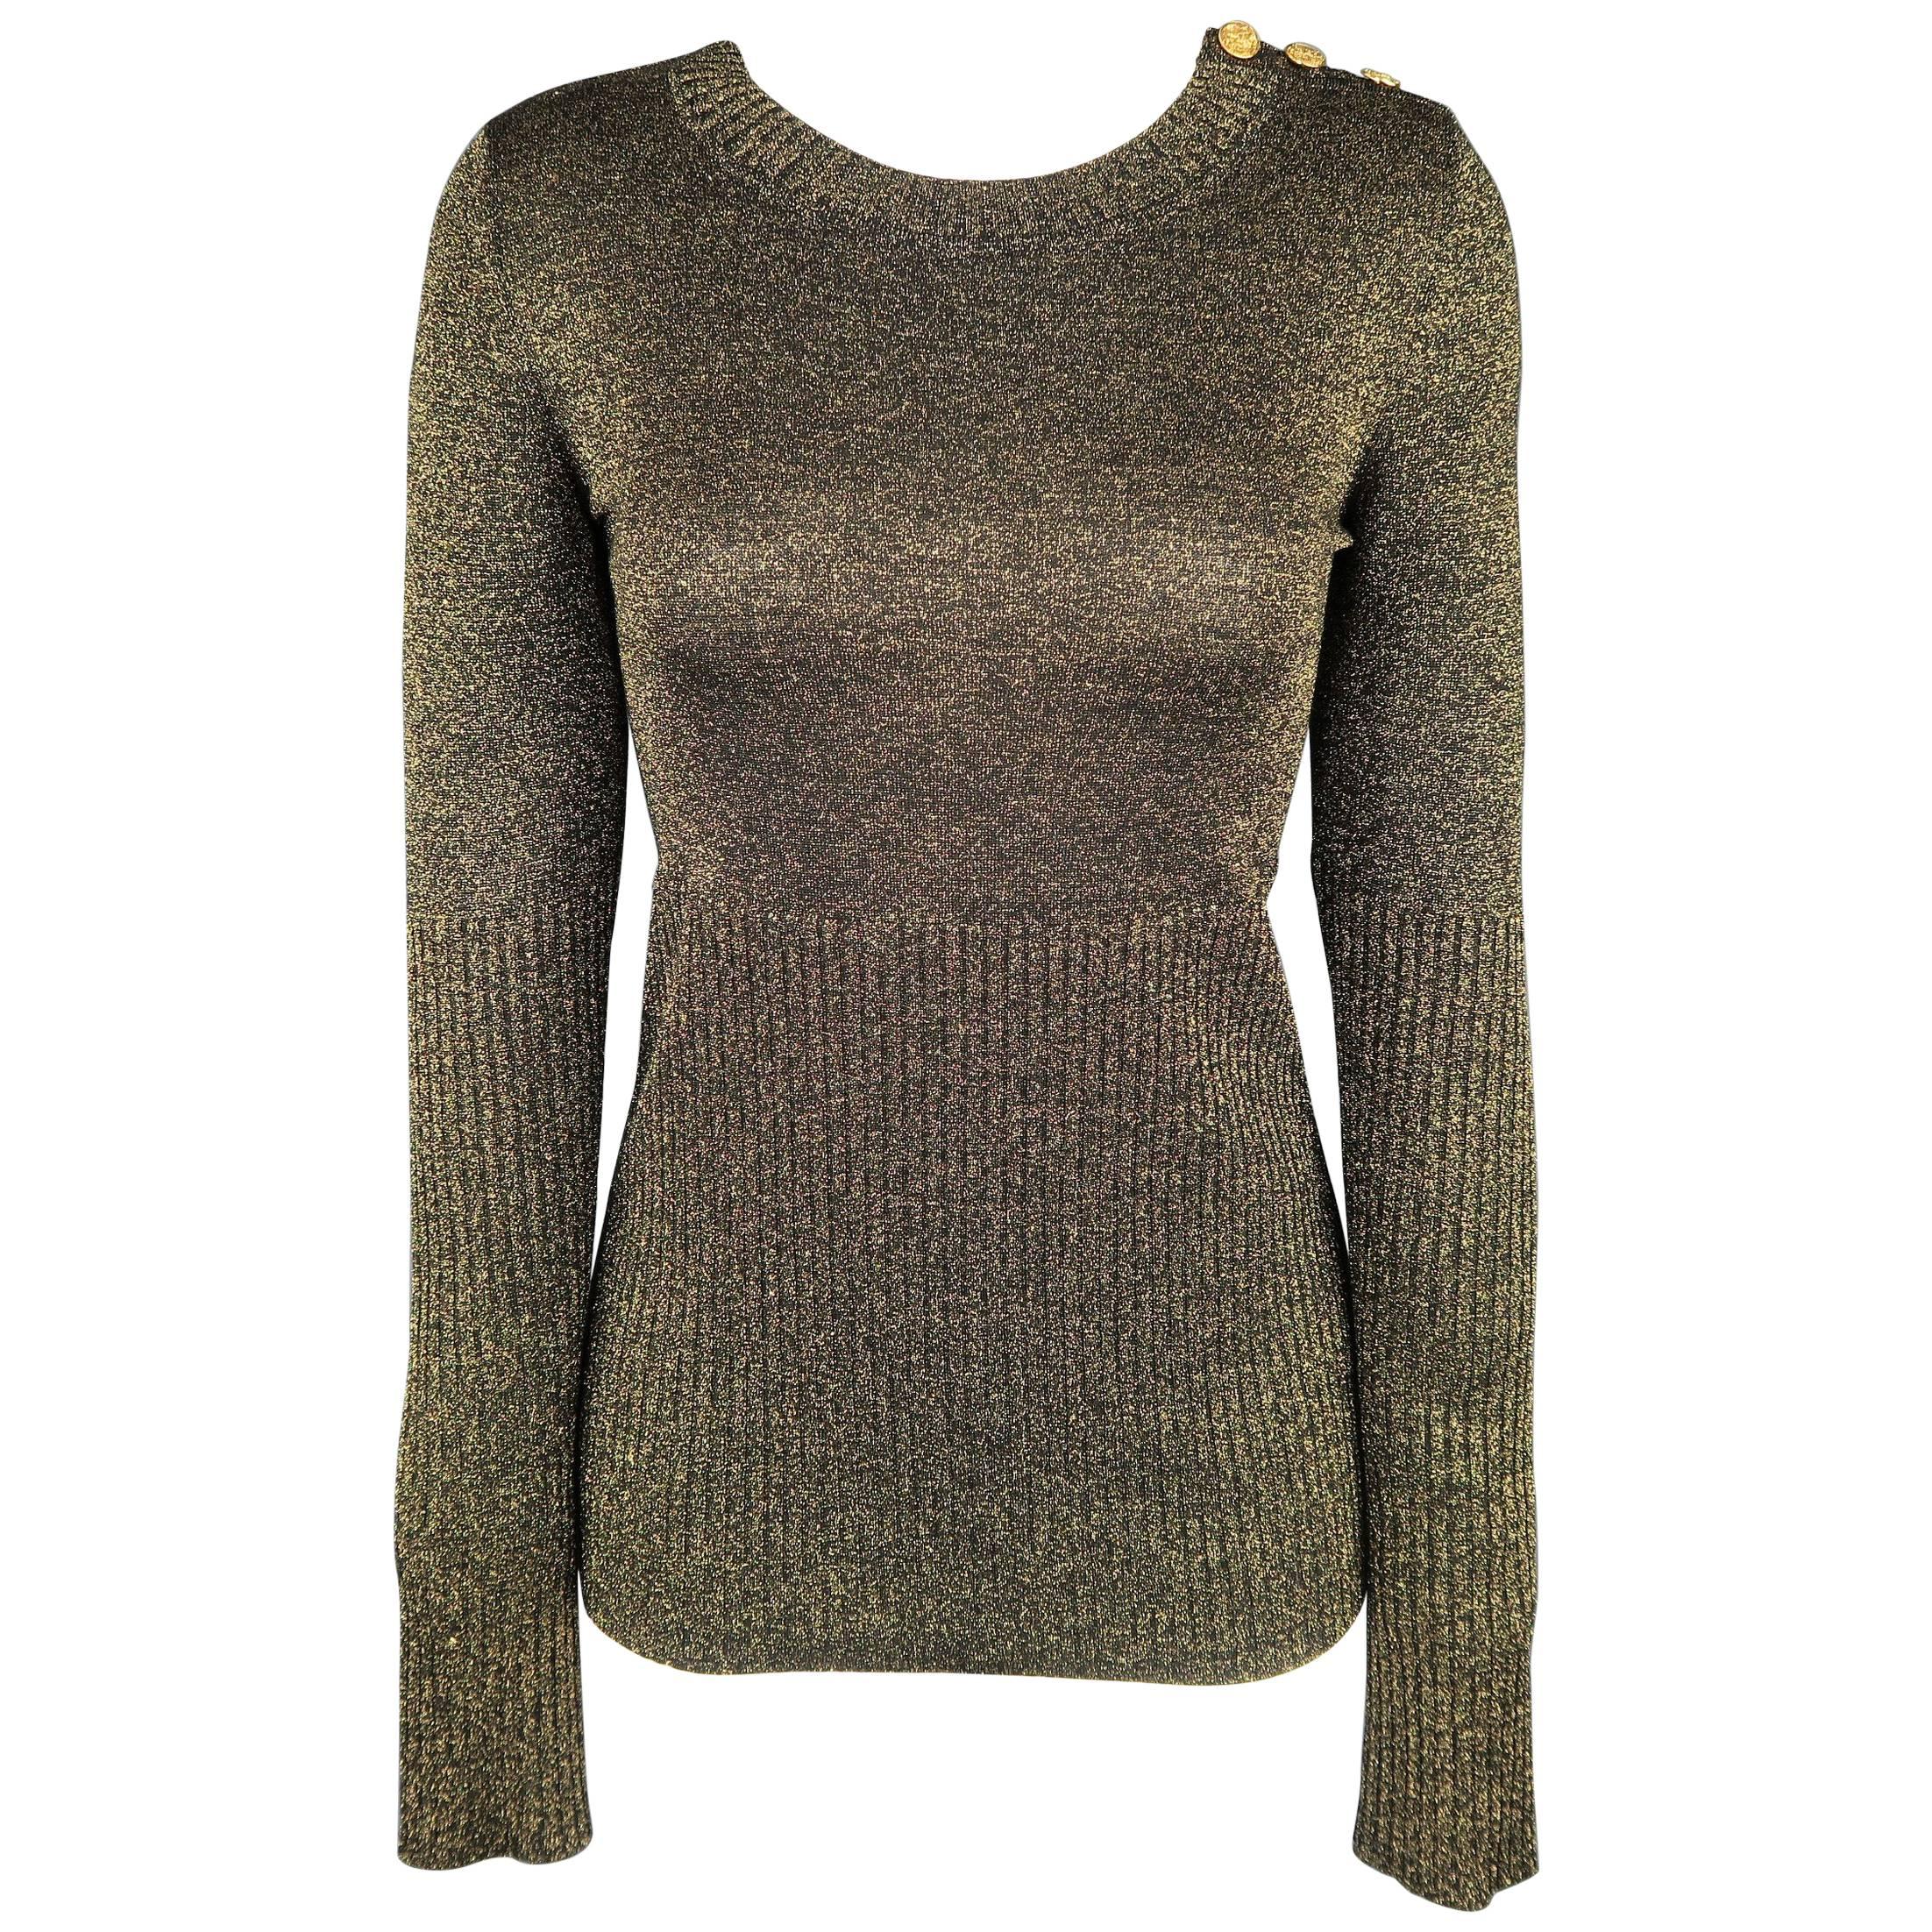 CHANEL Sweater - Size 6 Gold Wool Blend Lurex Button Shoulder Pullover